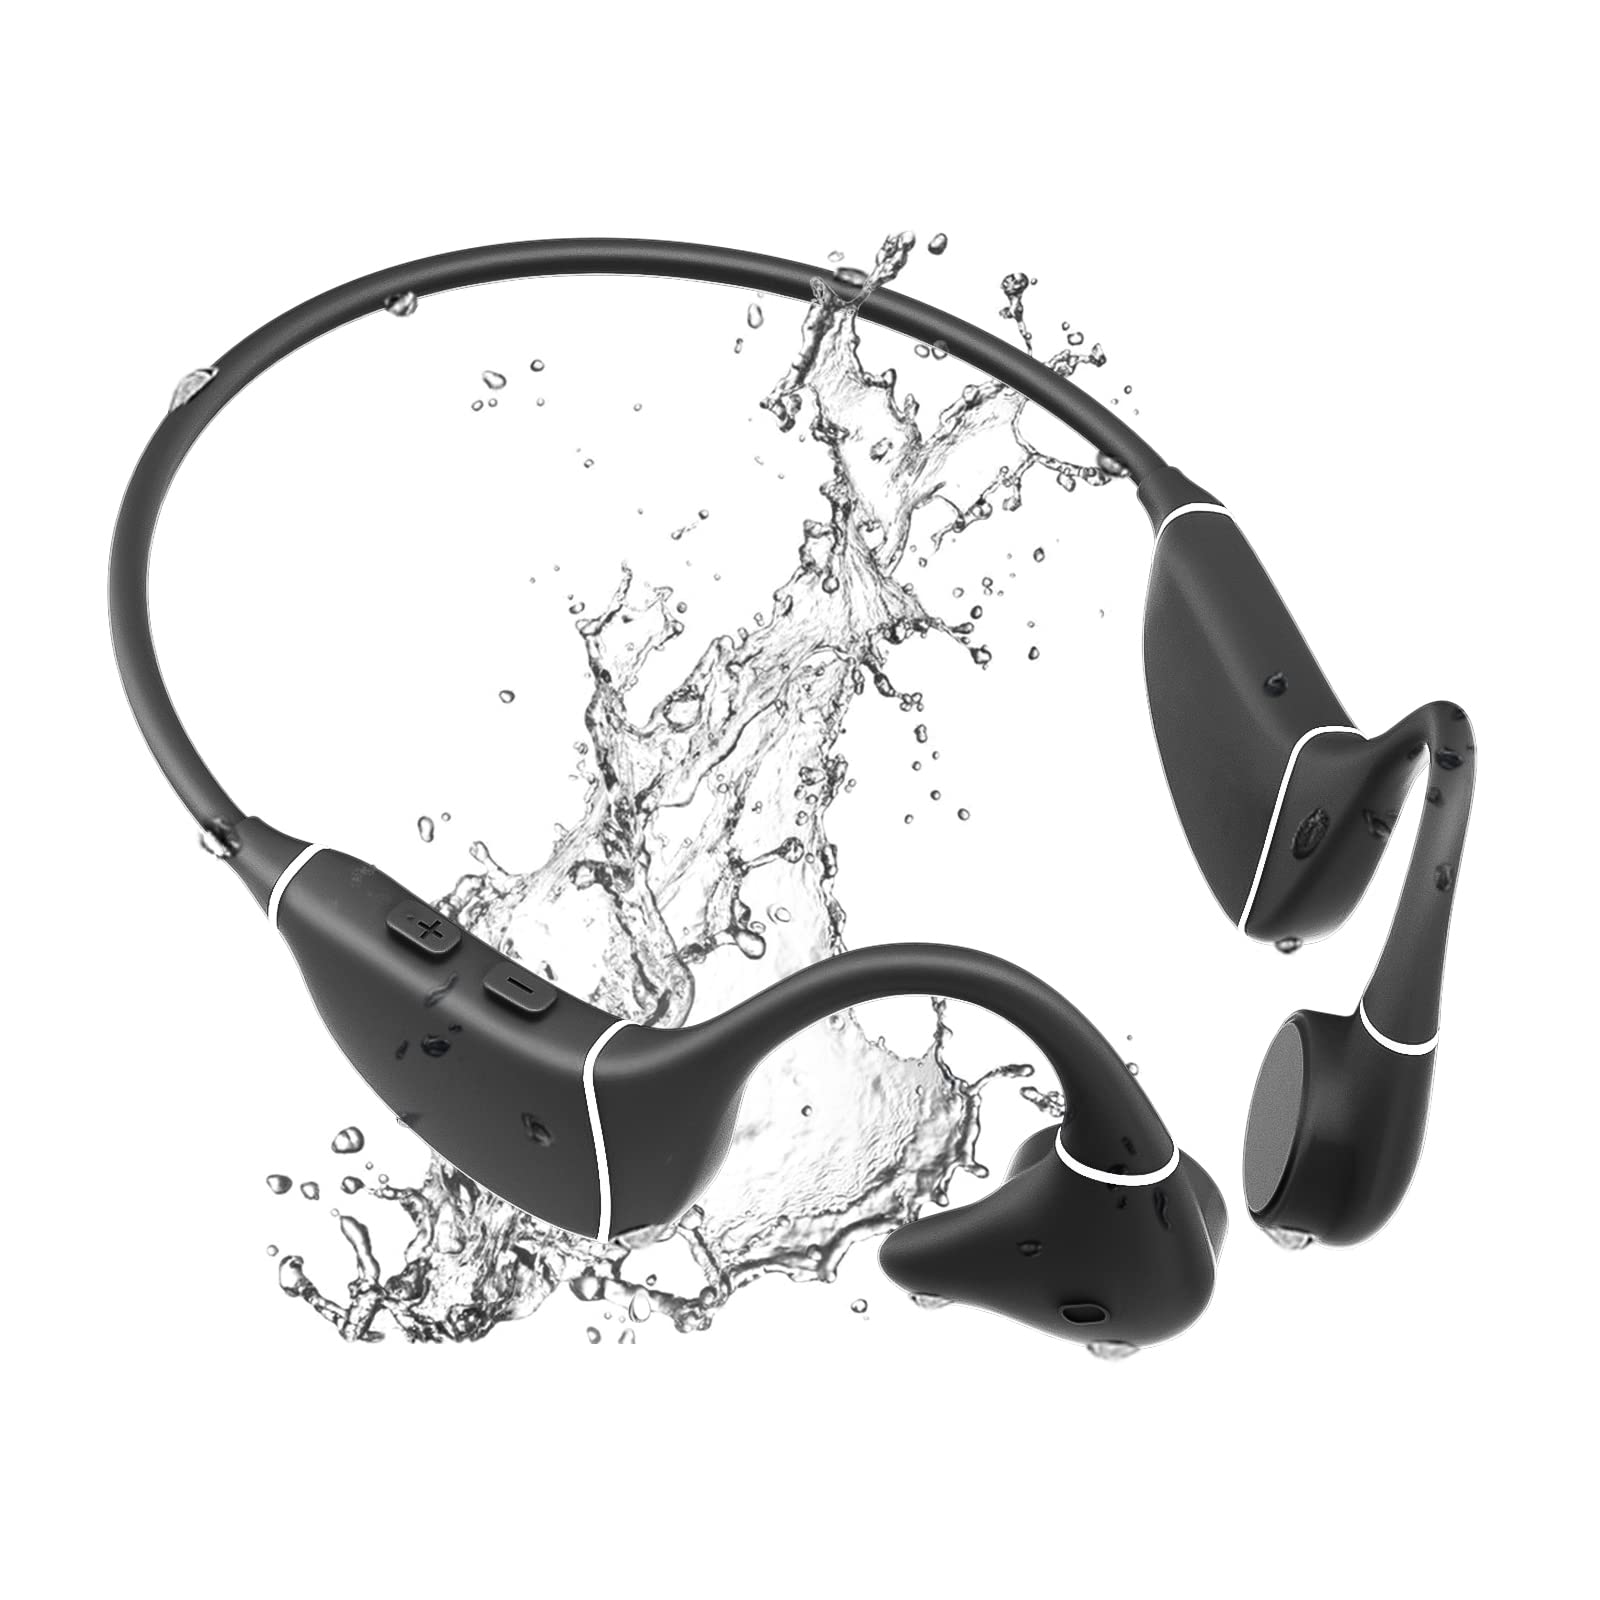 Bone Conduction Headphones Bluetooth 5.2 Wireless Open Ear Earphones IPX8 Waterproof Swimming Headset with MP3 8GB Flash Memo